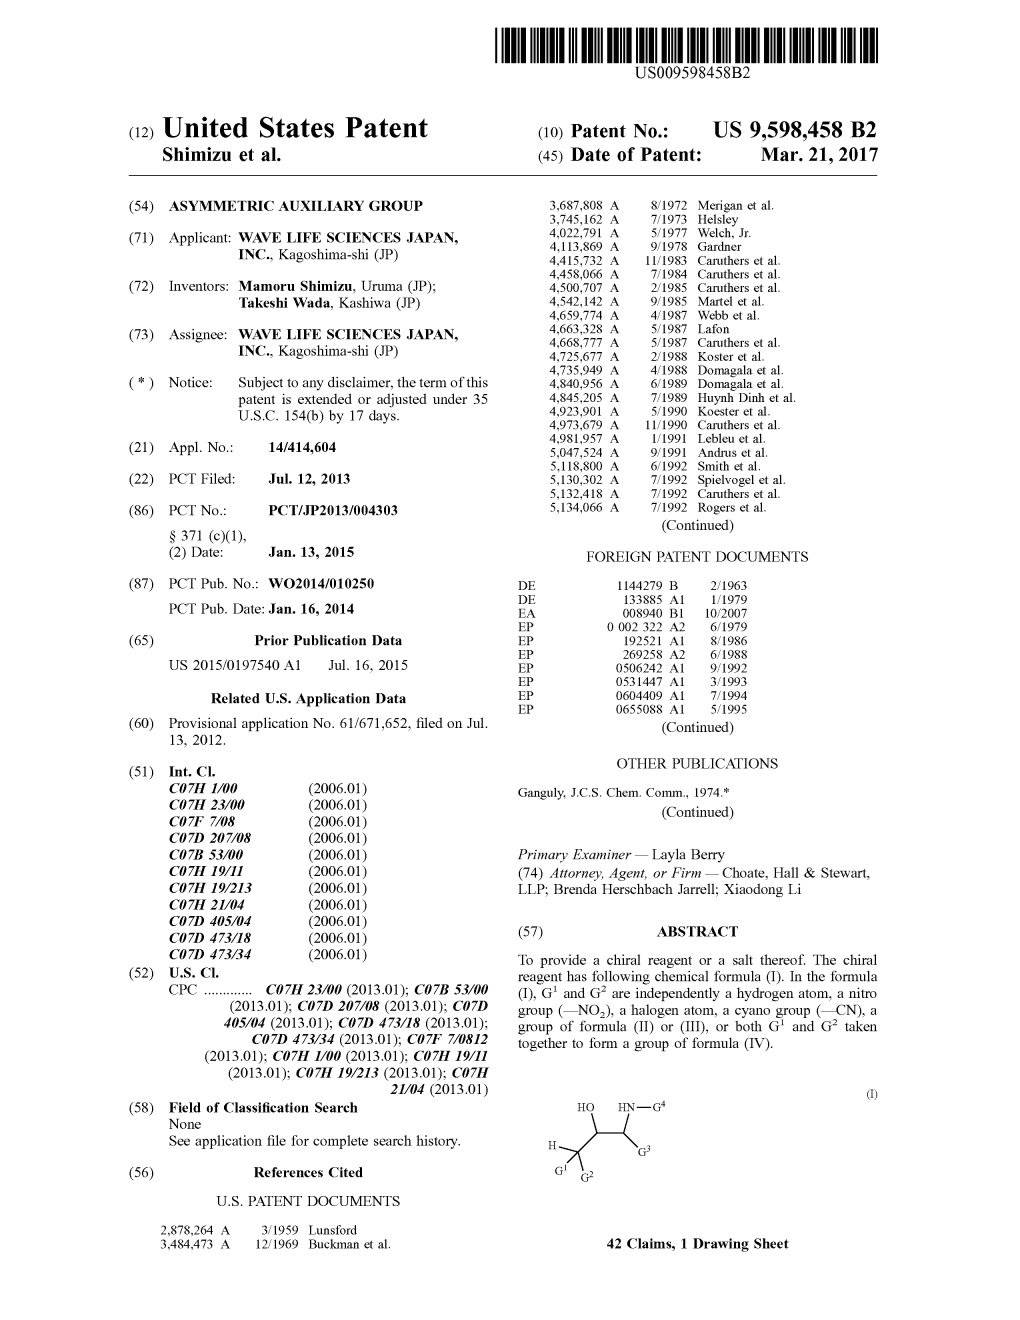 (12) United States Patent (10) Patent No.: US 9,598.458 B2 Shimizu Et Al